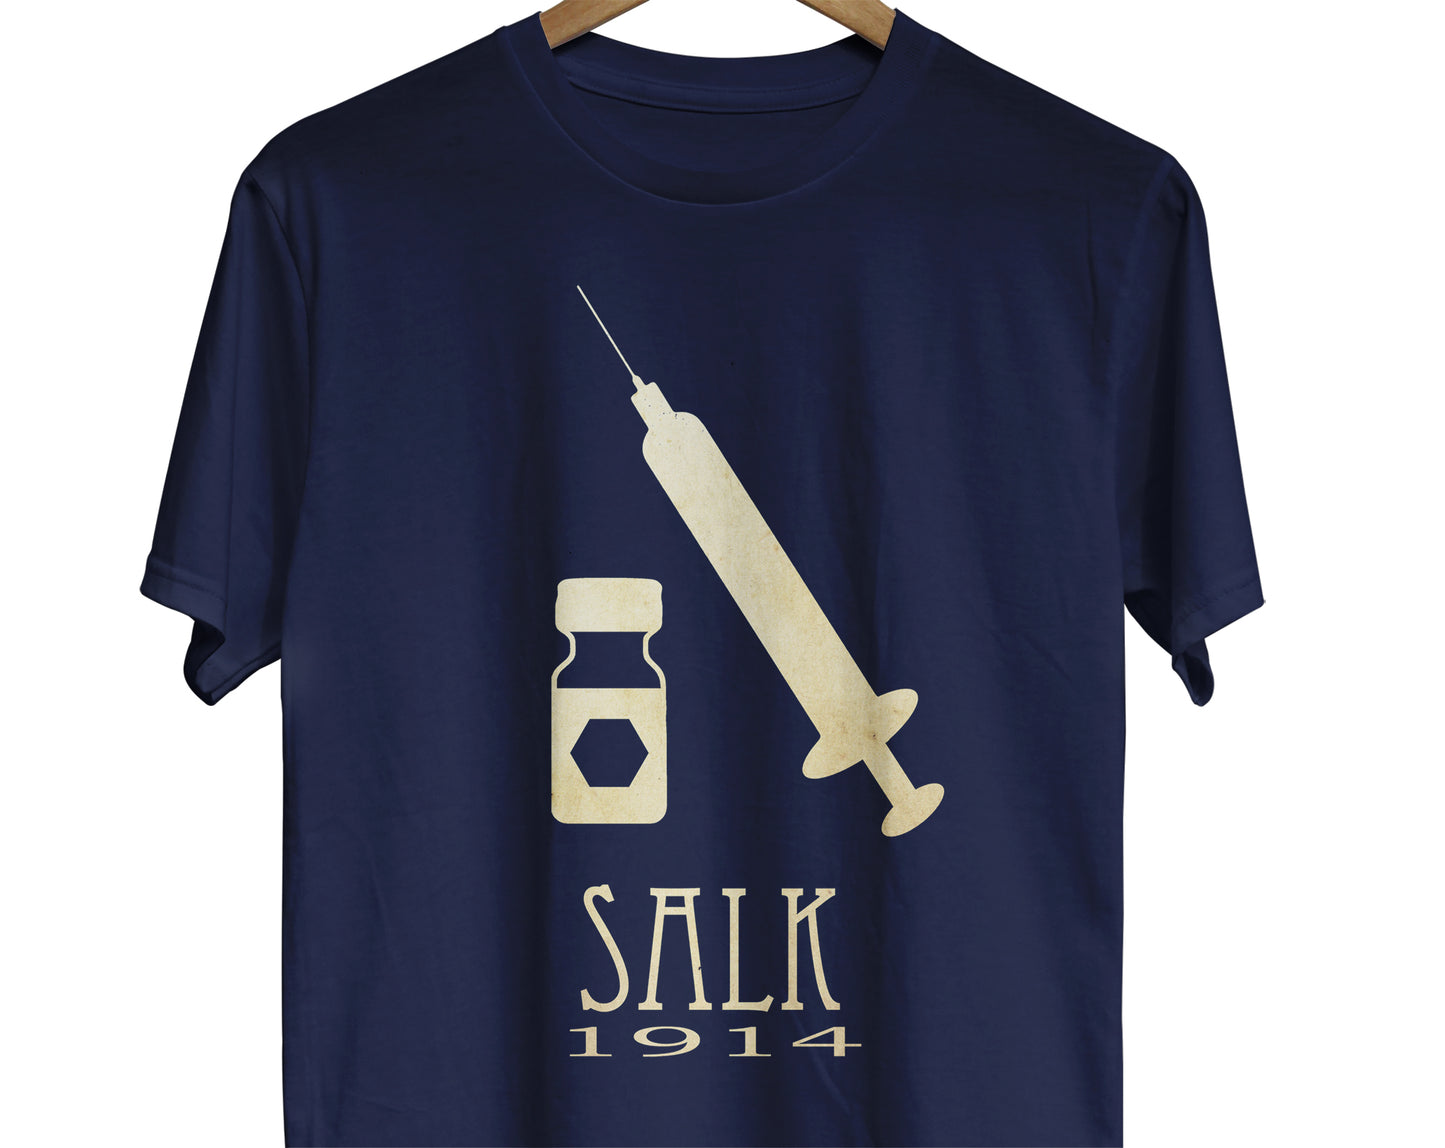 Jonas Salk pro vaccination t-shirt for microbiology student or science teacher